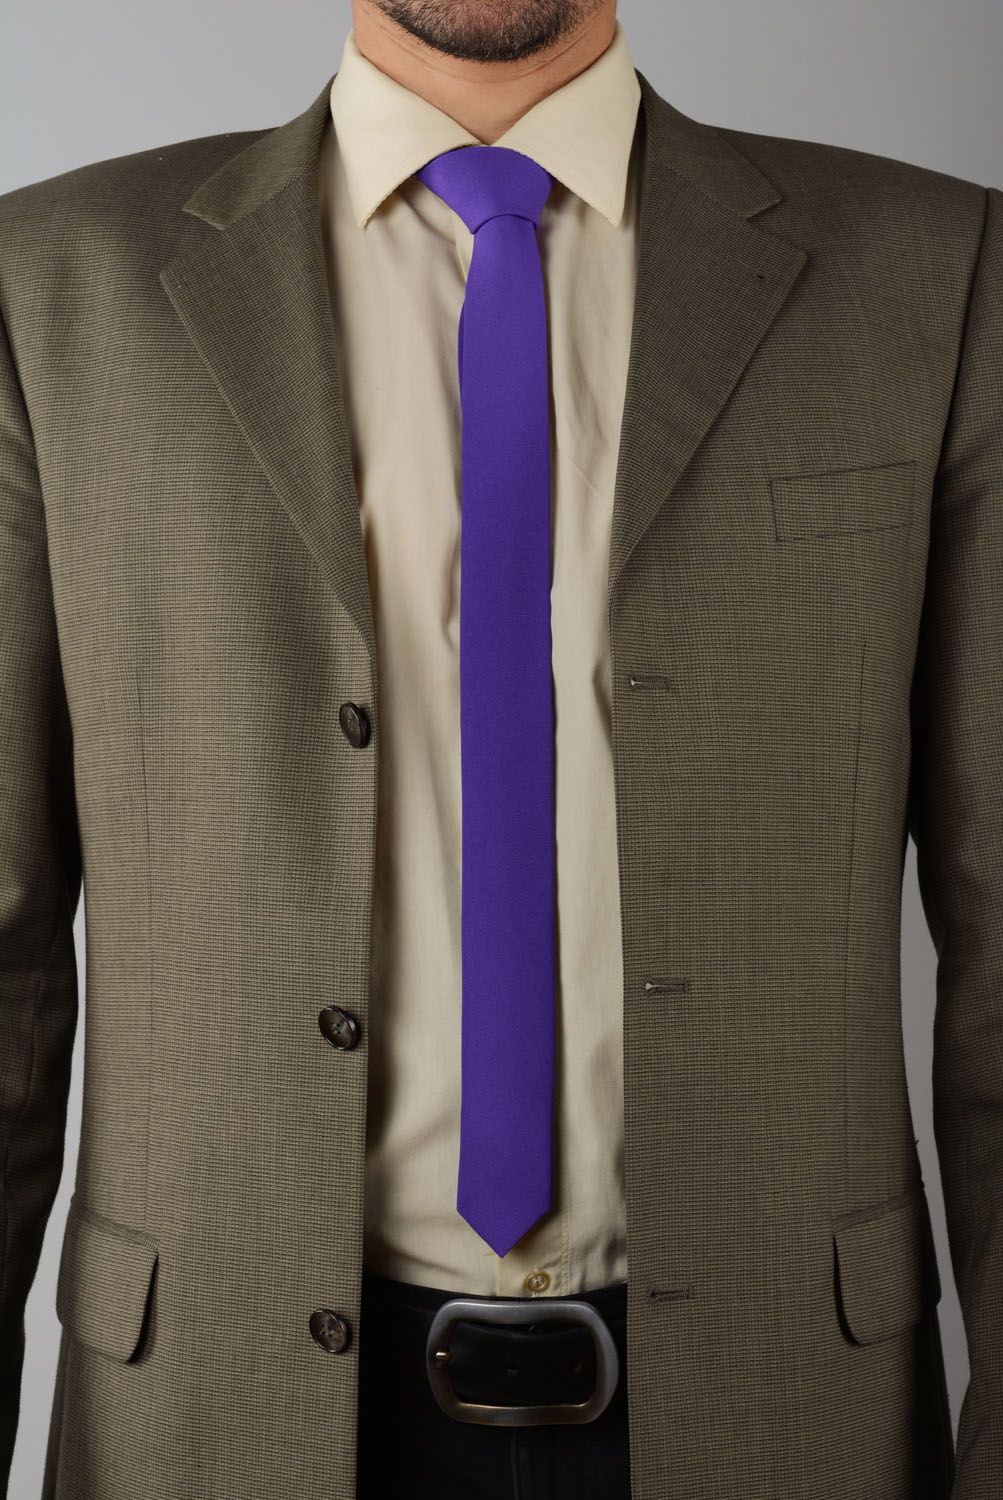 Cravate fine violette faite main  photo 1